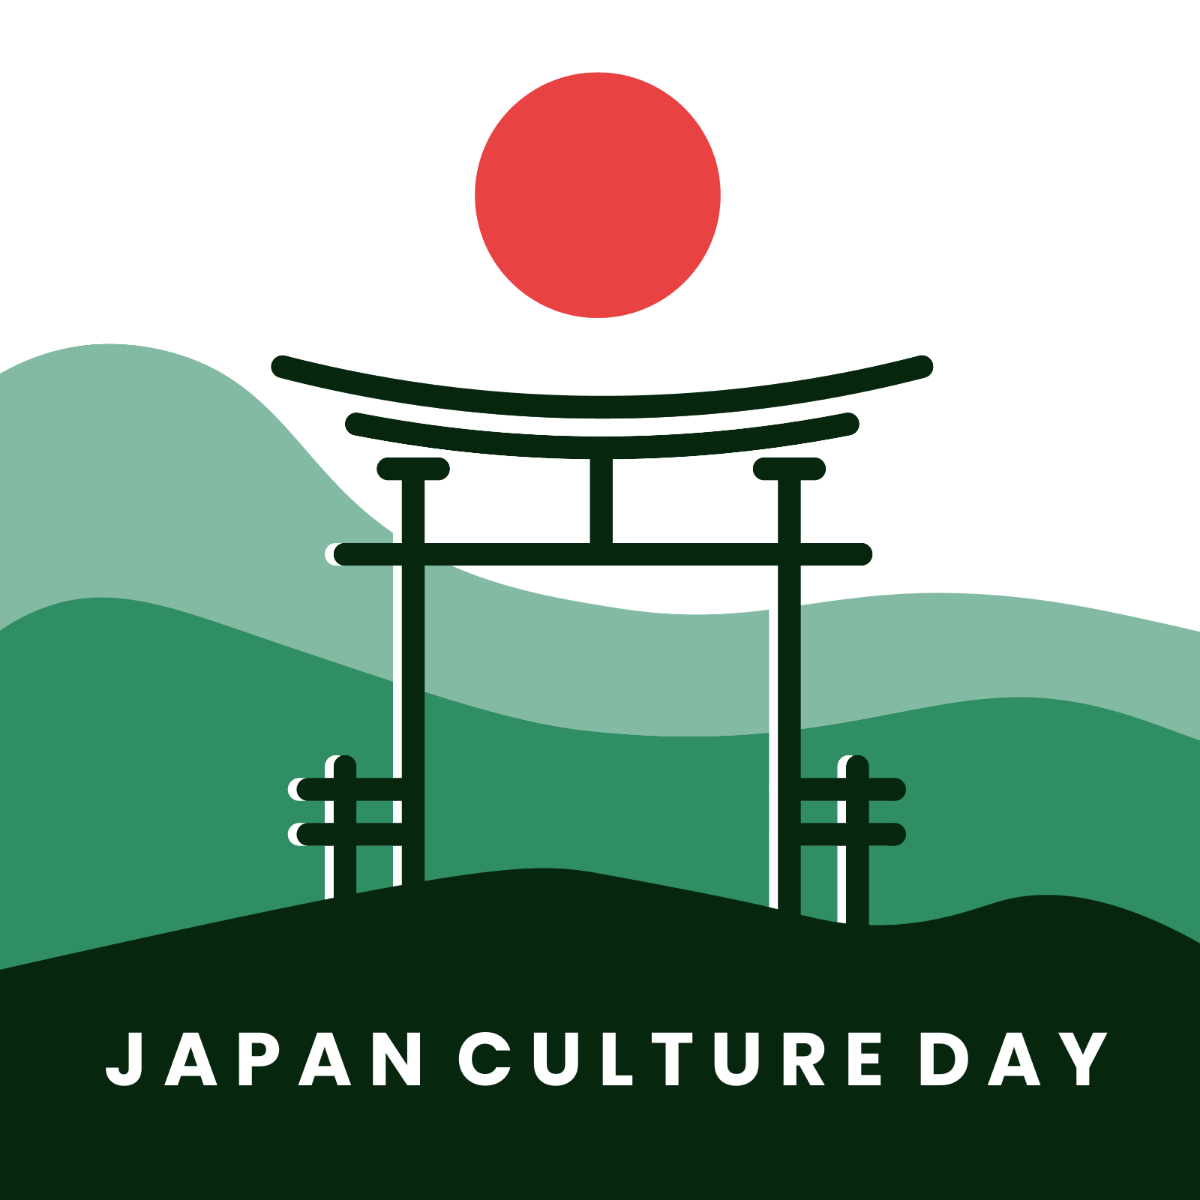 Japan Culture Day WhatsApp Post